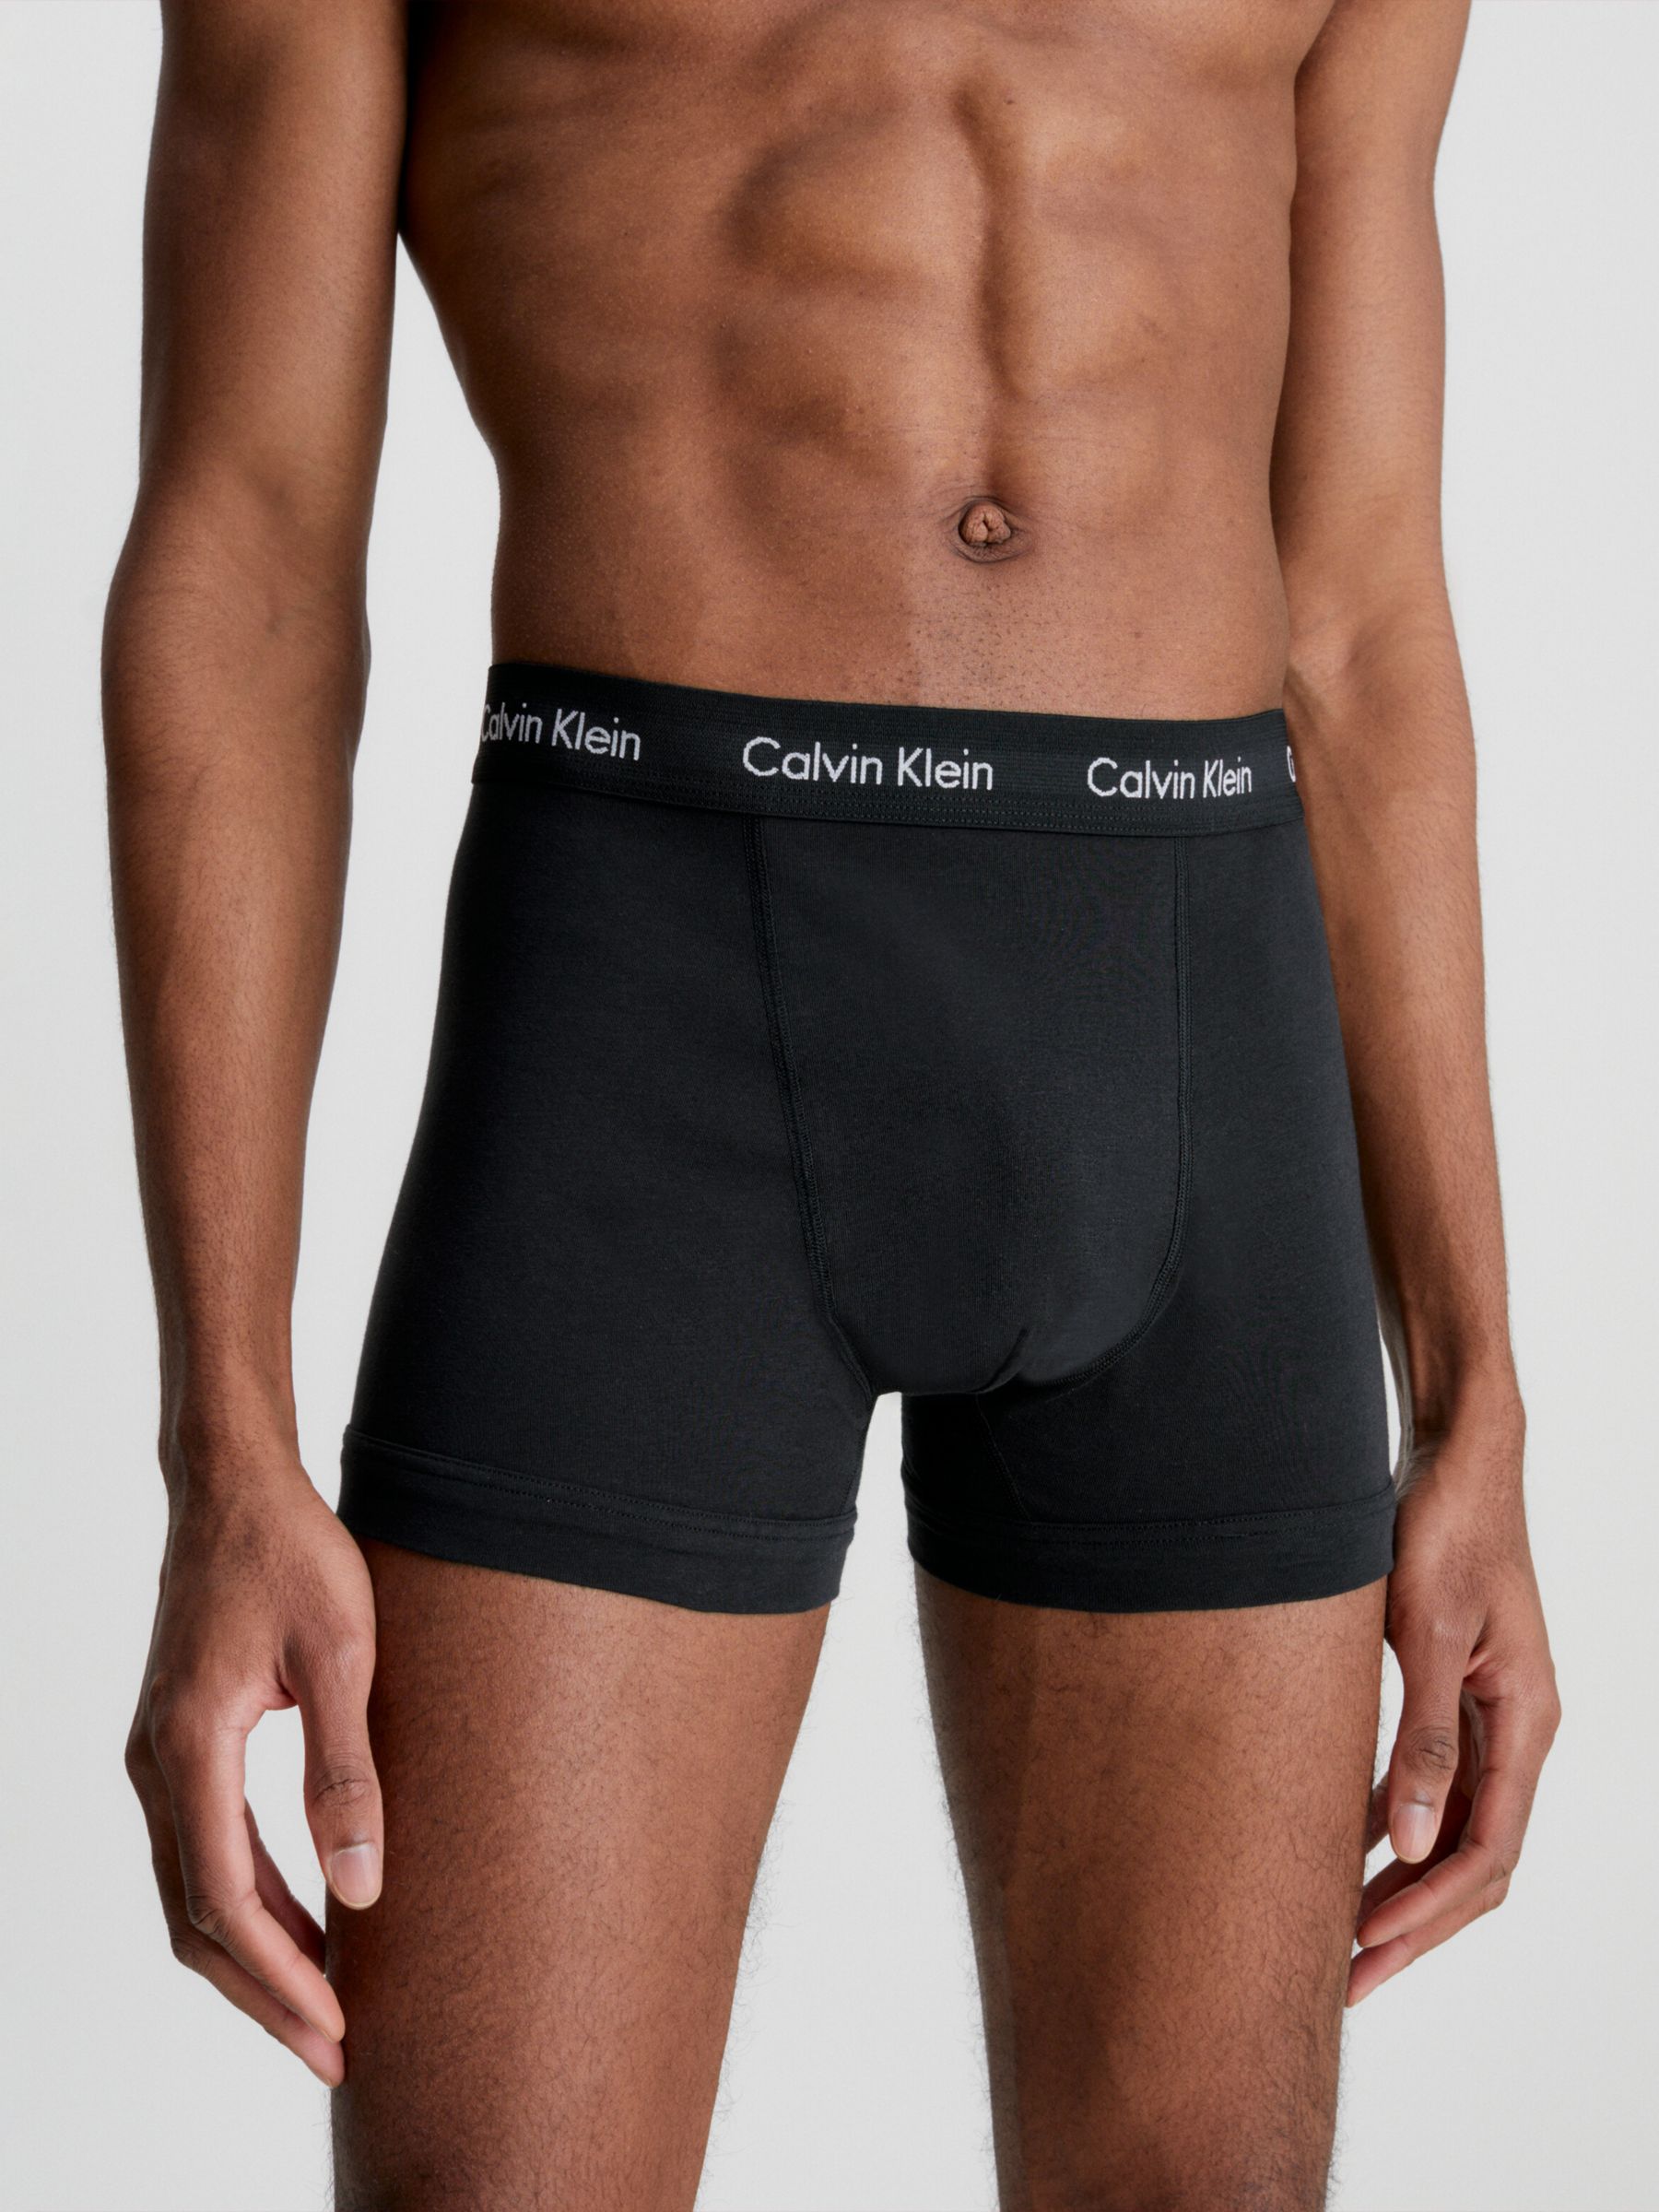 Calvin Klein Regular Cotton Stretch Trunks, of 3, Black at John Lewis & Partners